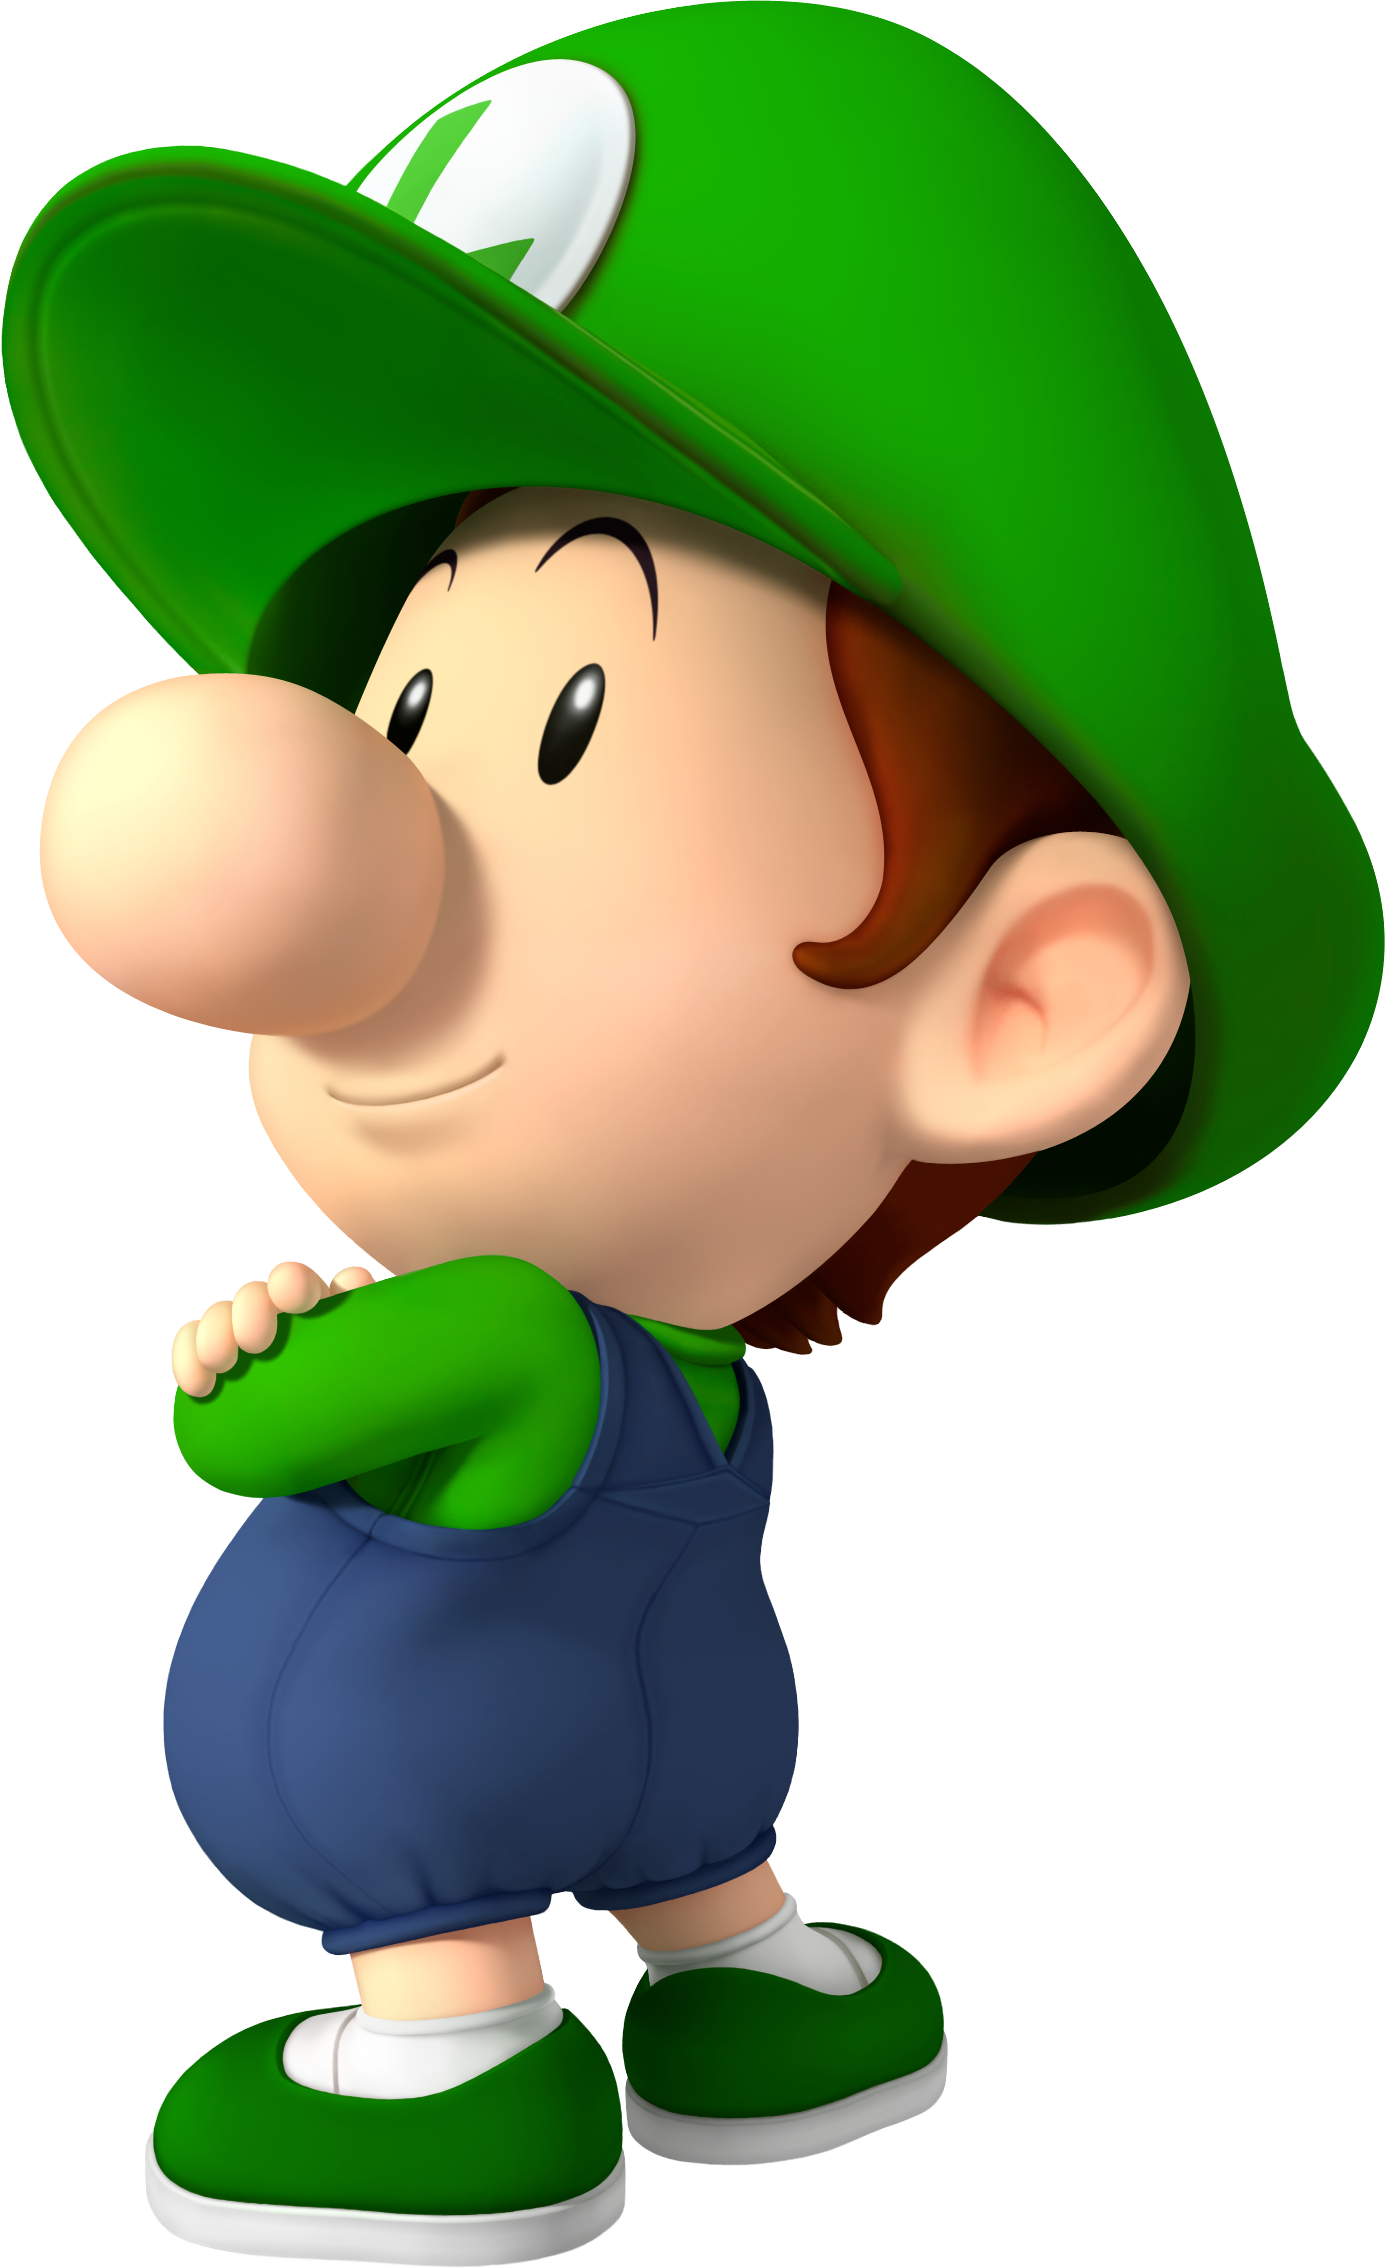 Baby Luigi - Mario Kart Wii.PNG